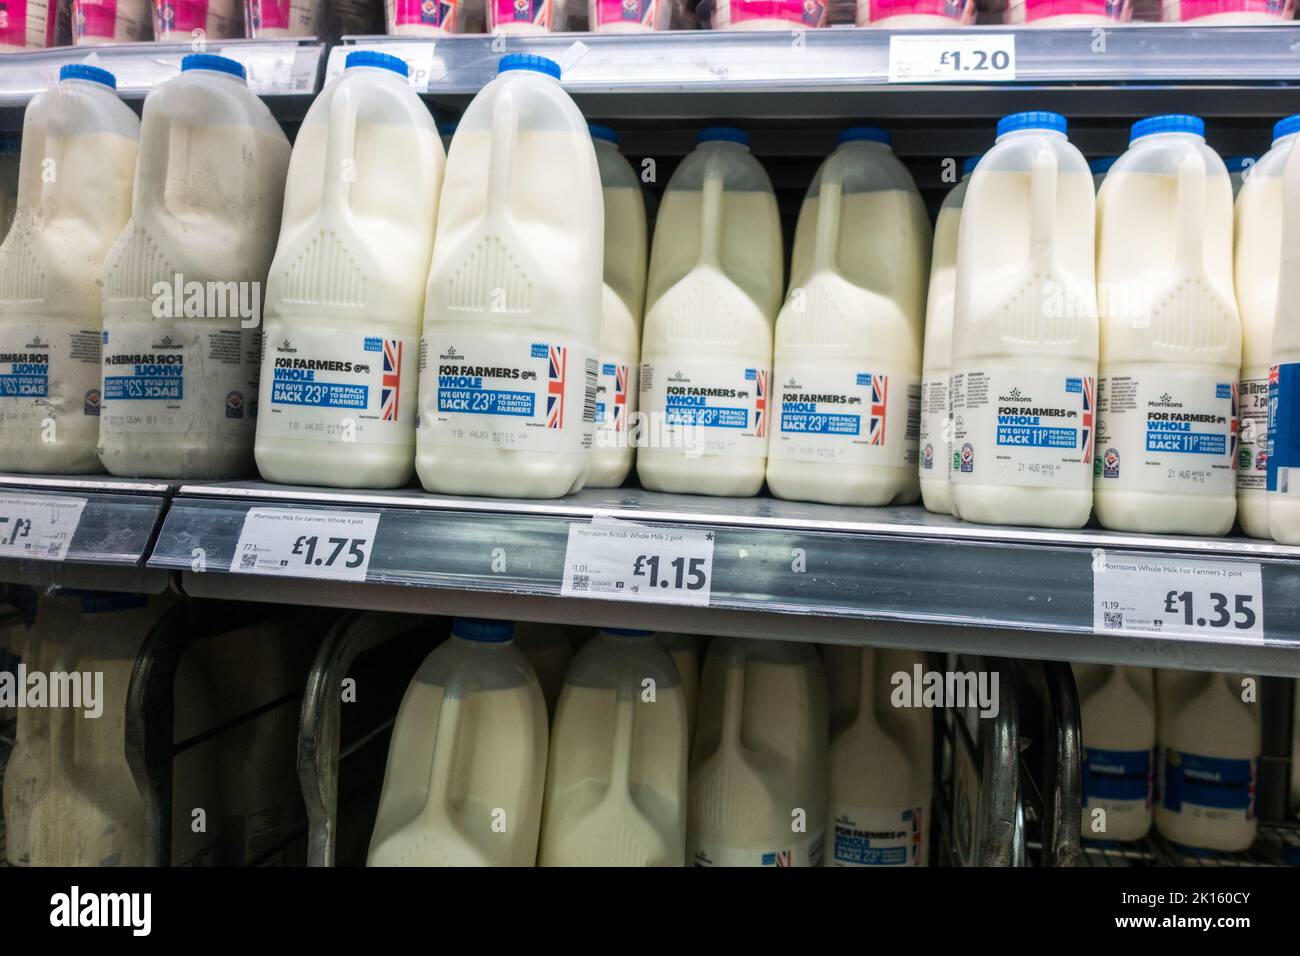 Full Fat milk for Farmers on sale in Morrison supermarket Stock Photo